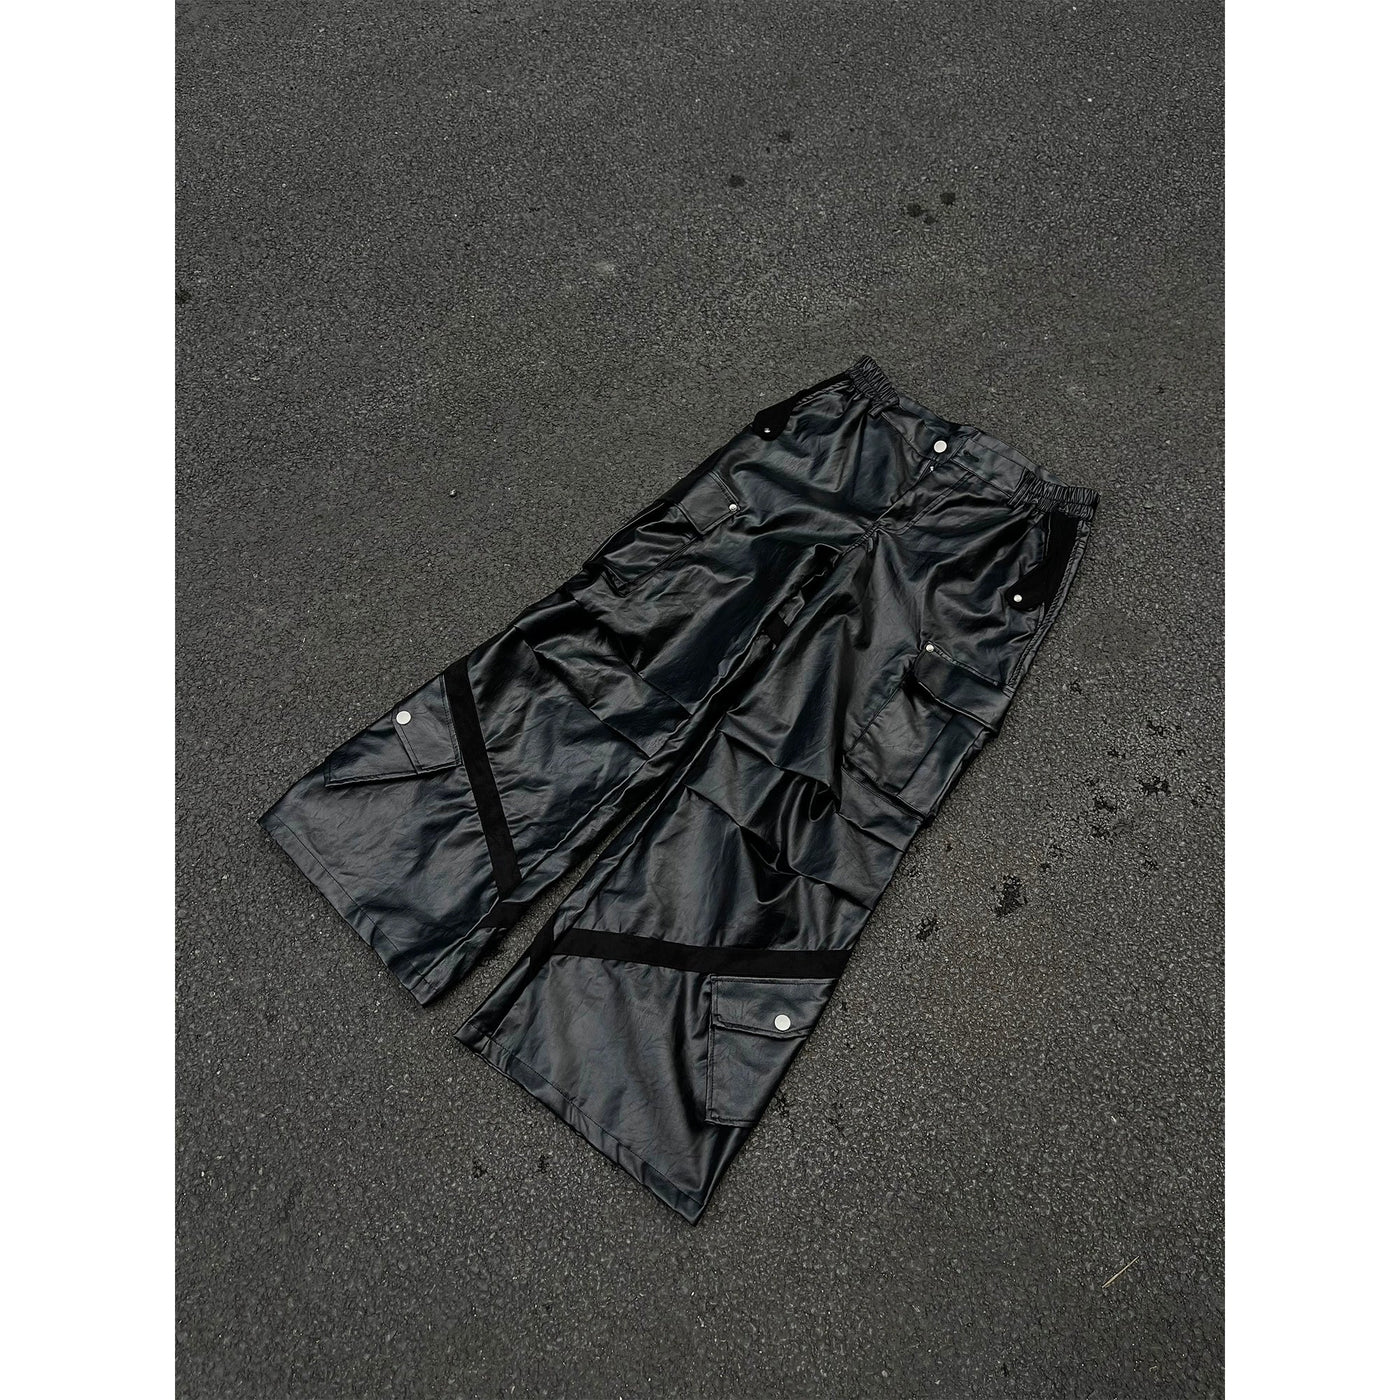 Sleek Big Pockets PU Leather Pants Korean Street Fashion Pants By MaxDstr Shop Online at OH Vault